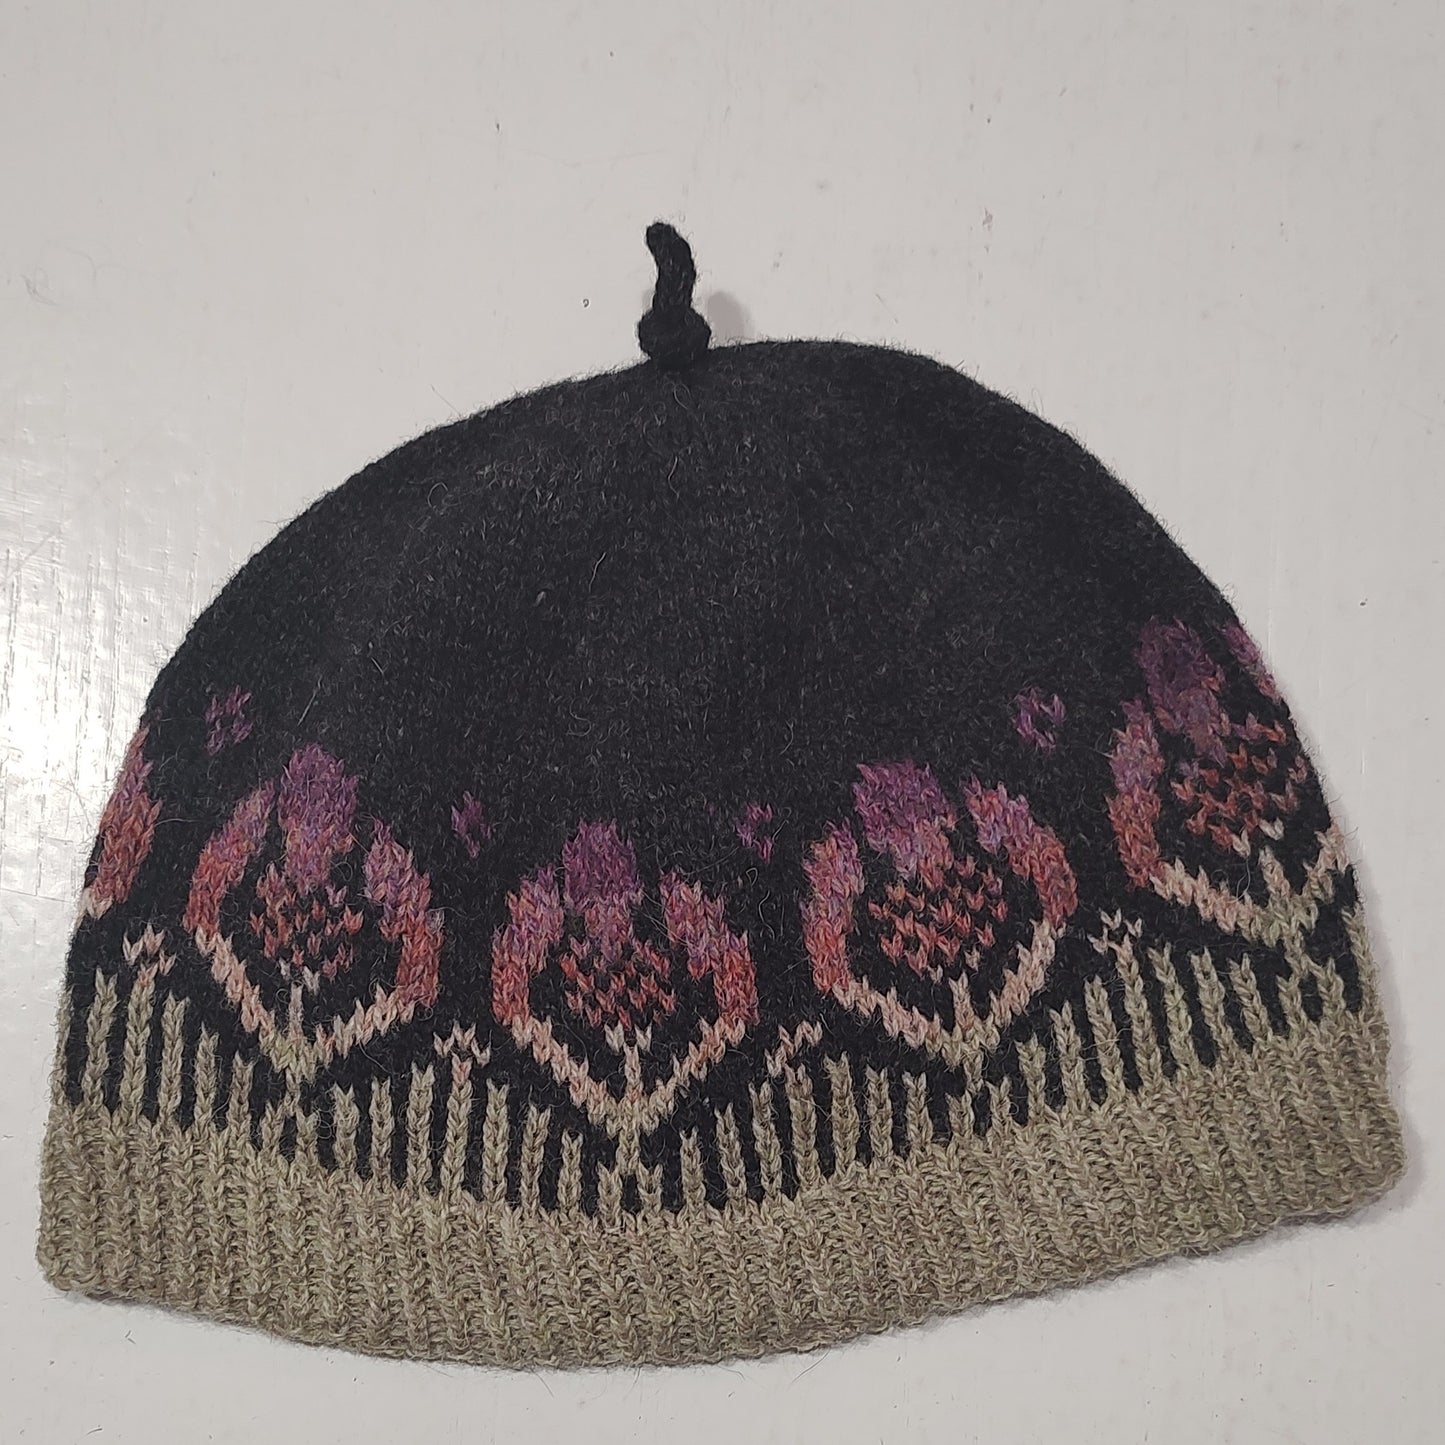 Knitted Hat - colourwork hat